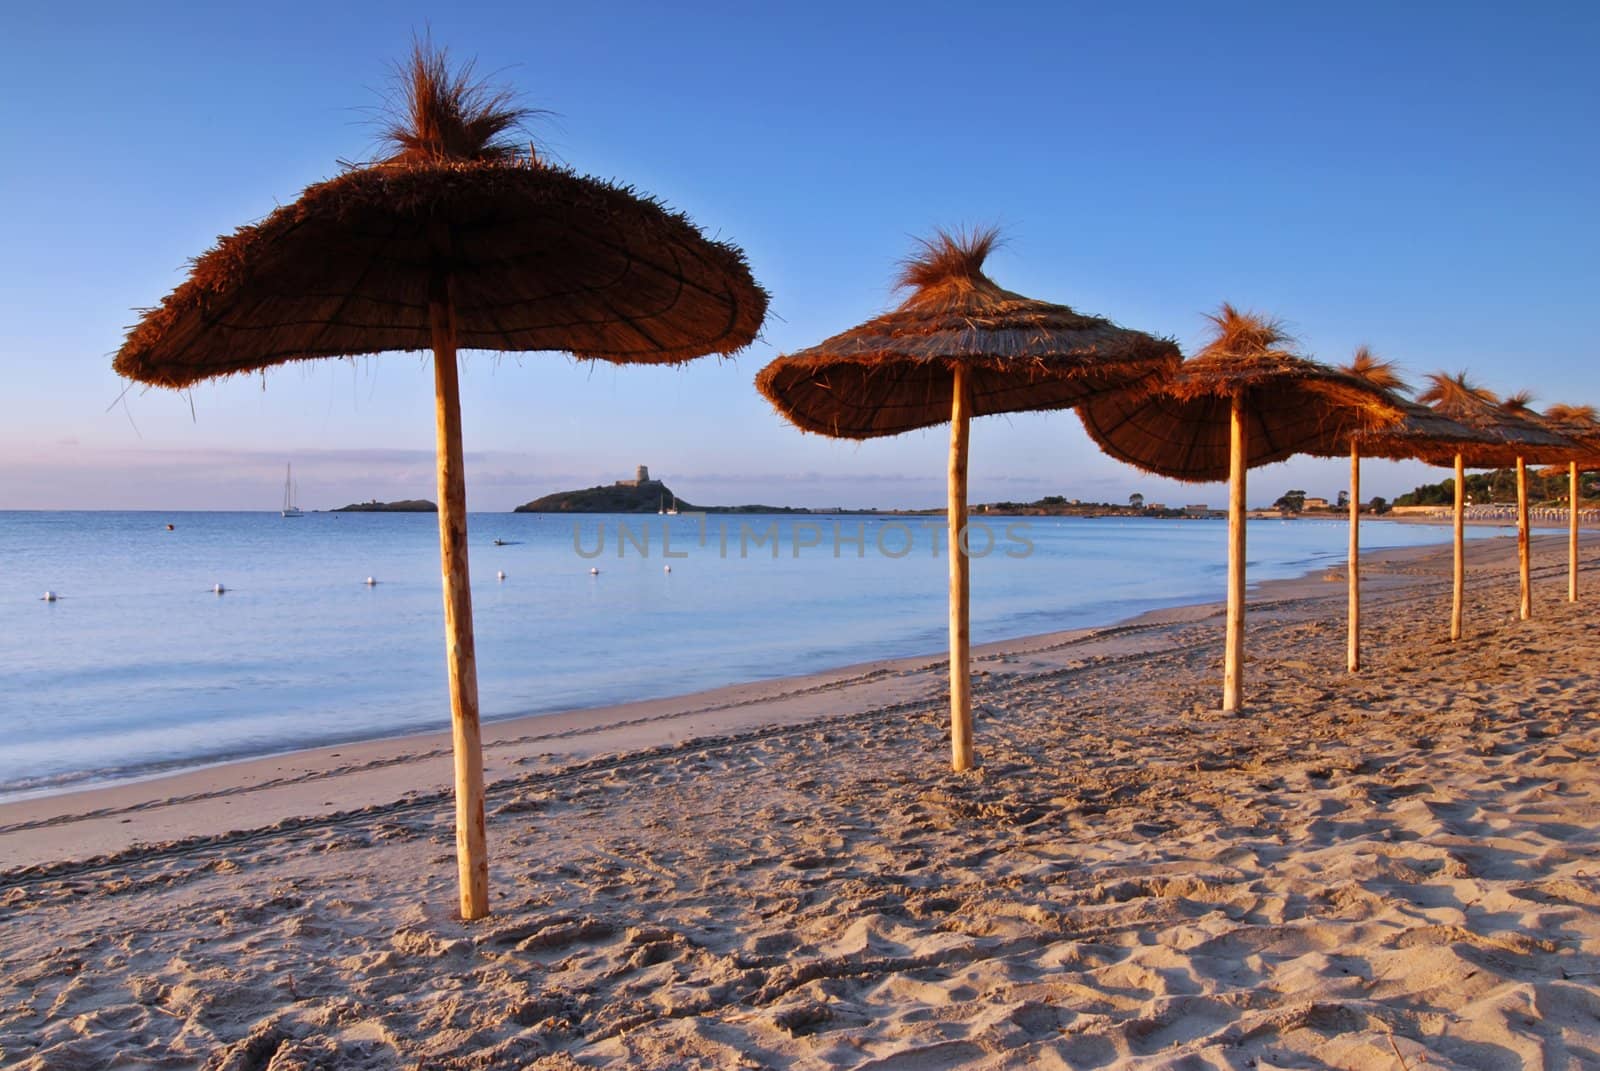 Ubrellas on the beach by fyletto